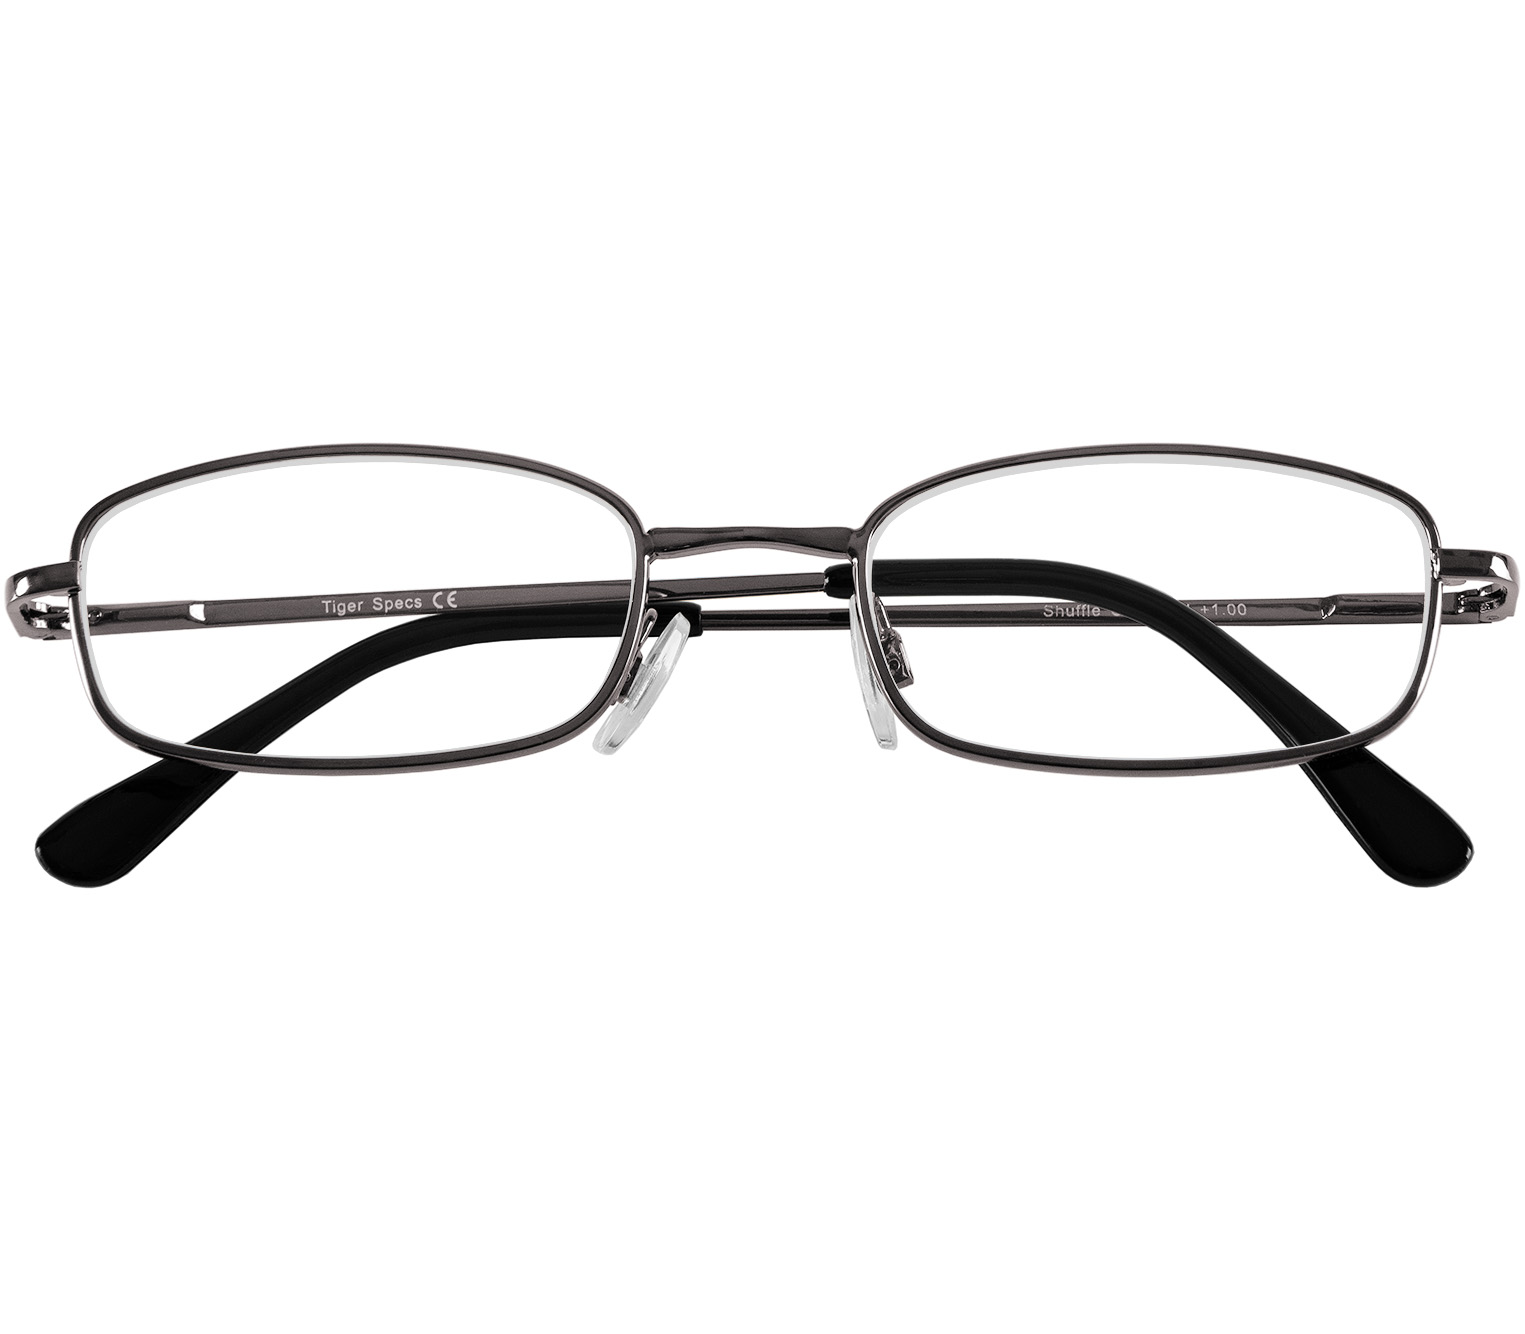 Shuffle (Gunmetal) Reading Glasses | Tiger Specs